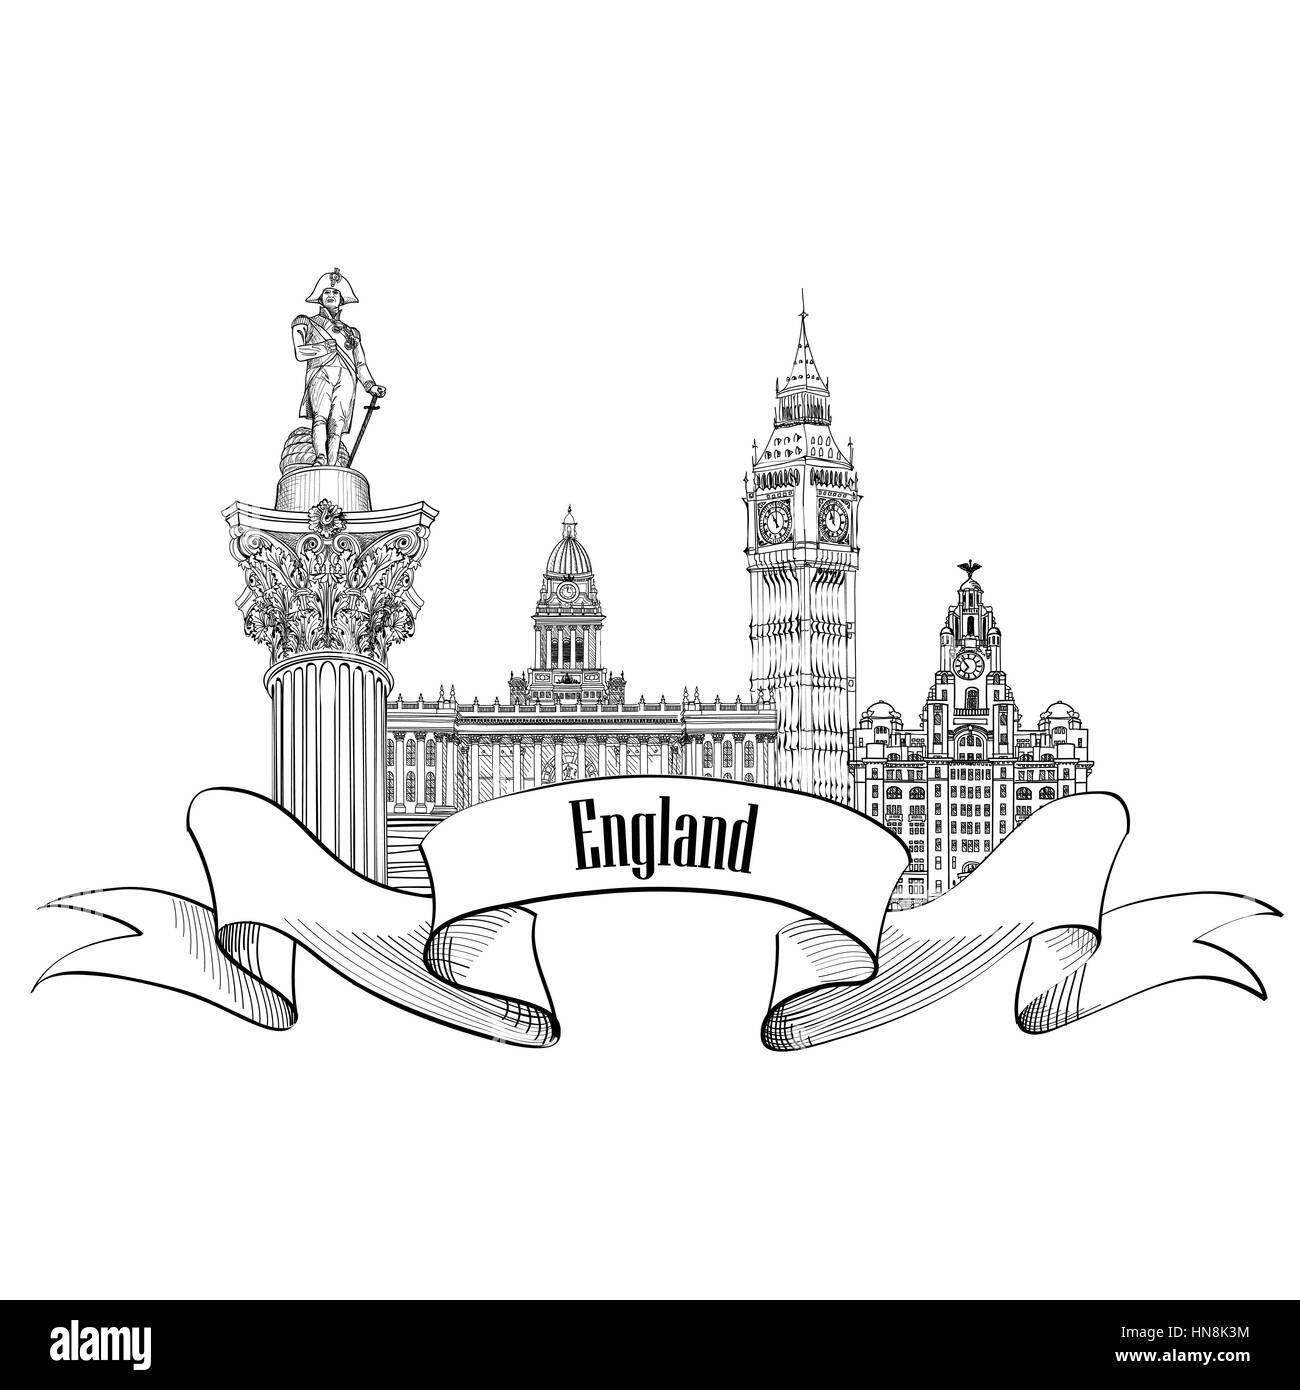 England label. Famous english architectural landmarks symbol. Visit UK. Travel Europe  banner. Stock Vector